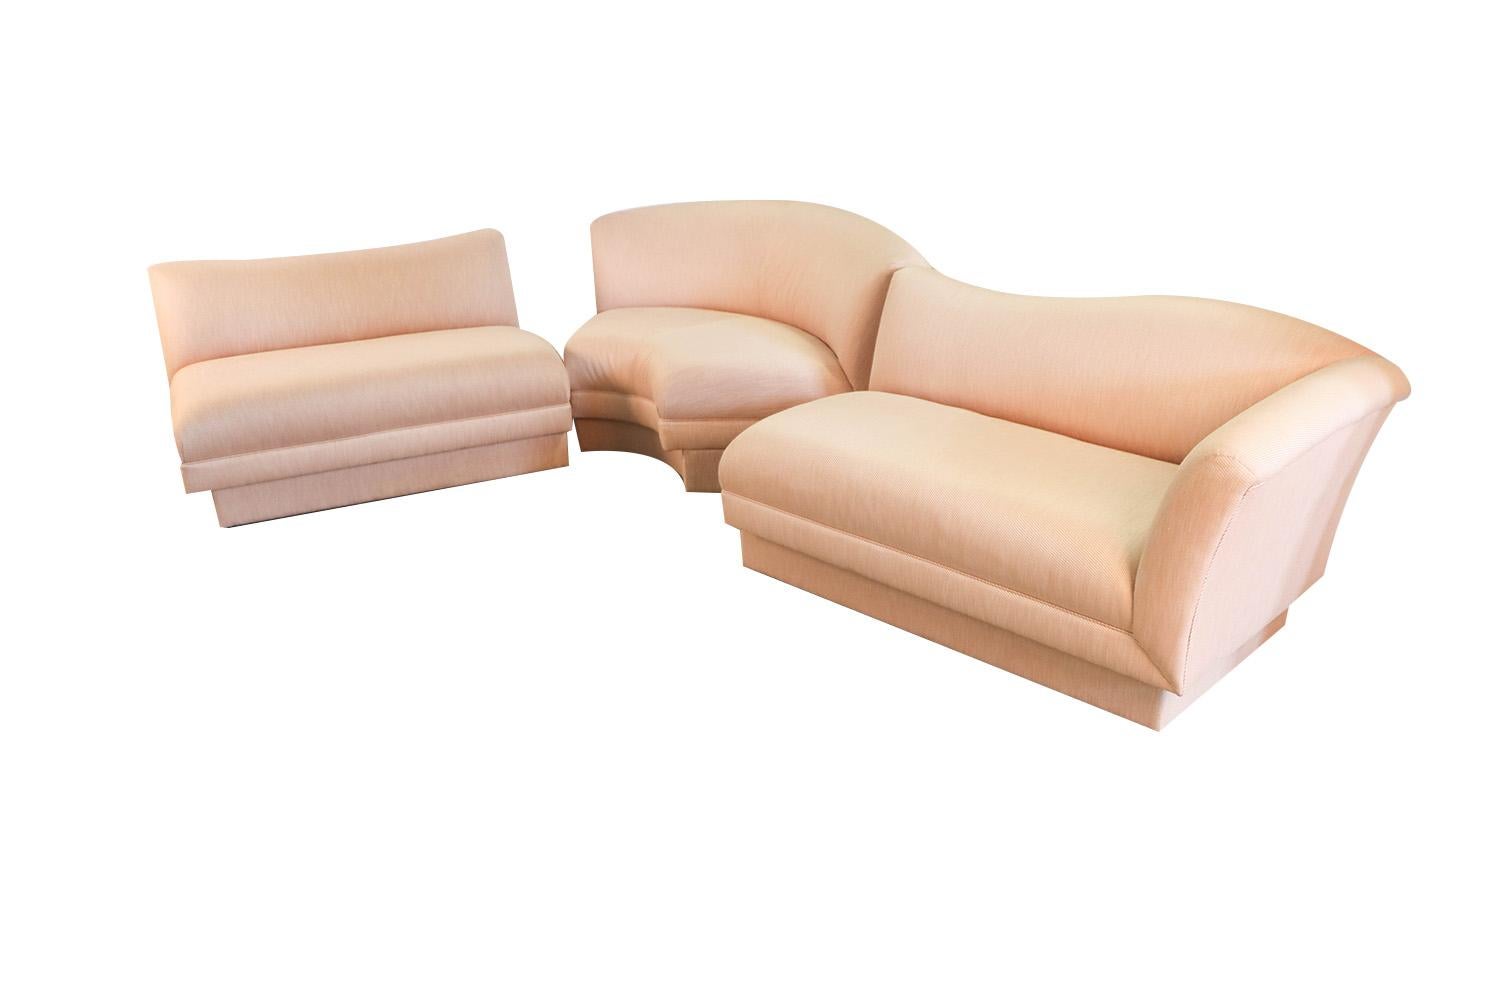 Midcentury Vladimir Kagan Style for Directional Sectional Sofa 1